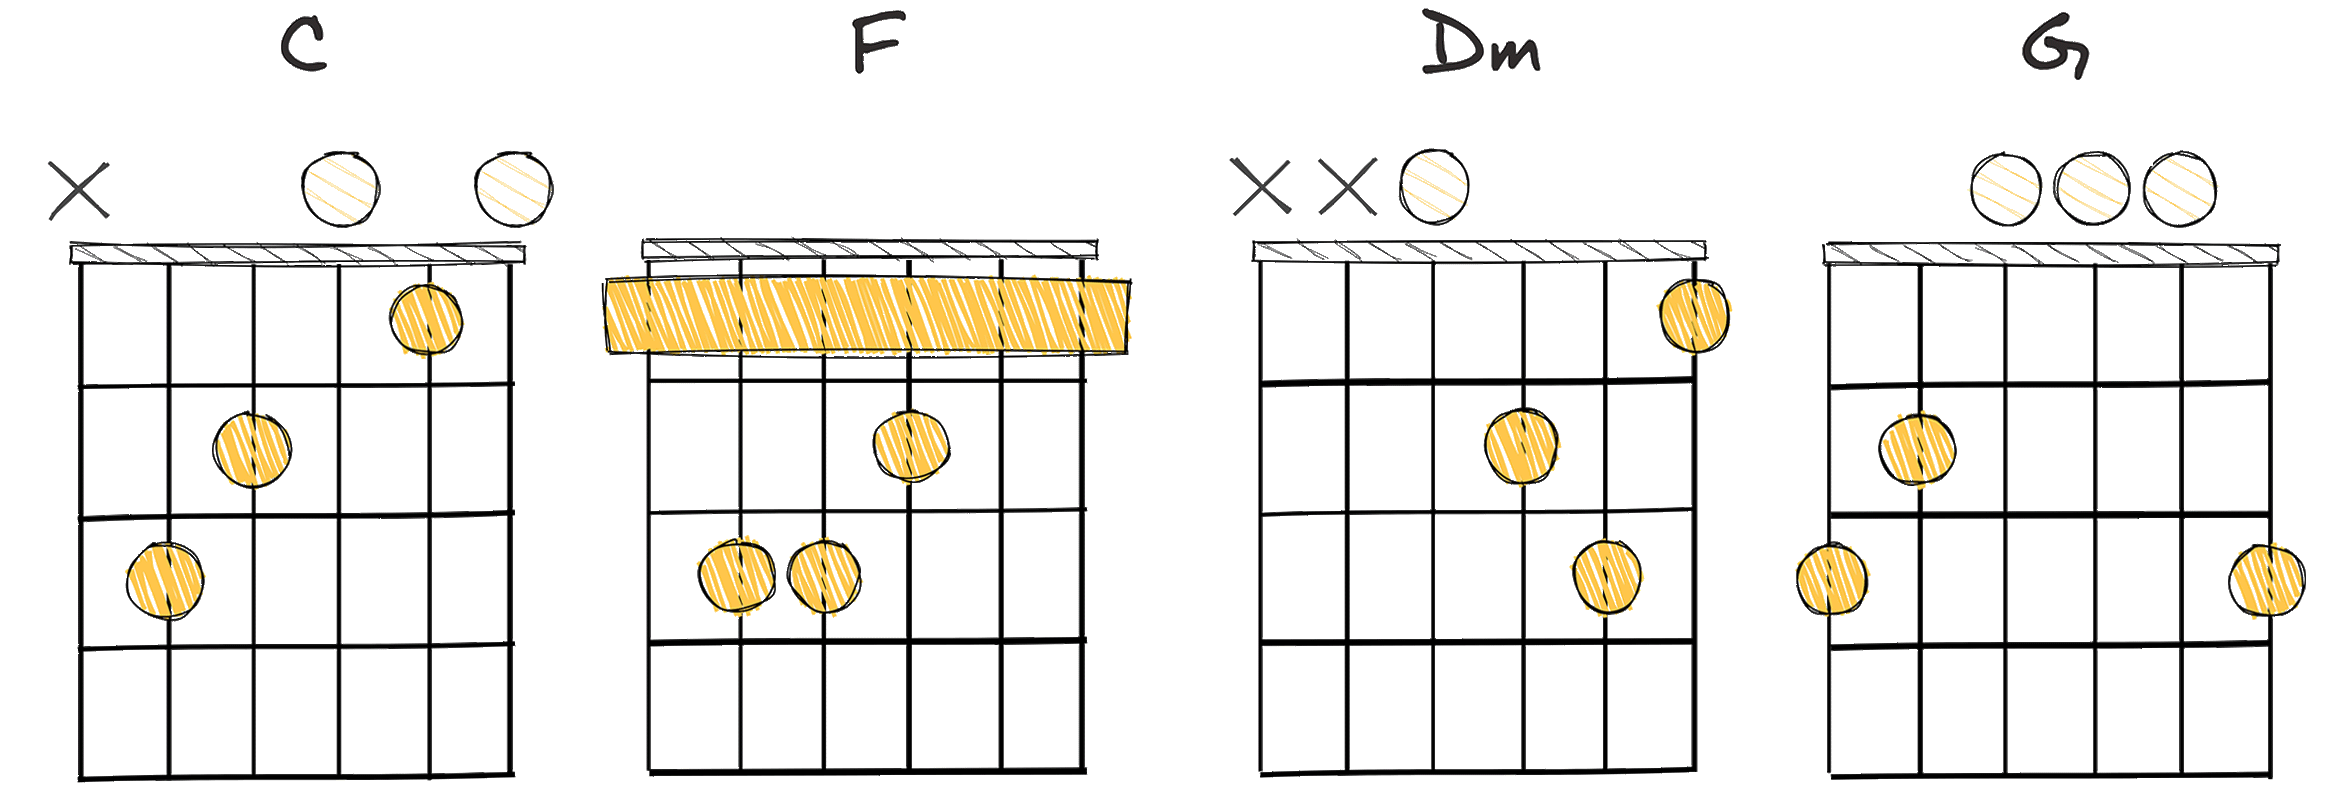 I - IV - ii - V (1-4-2-5) chords diagram